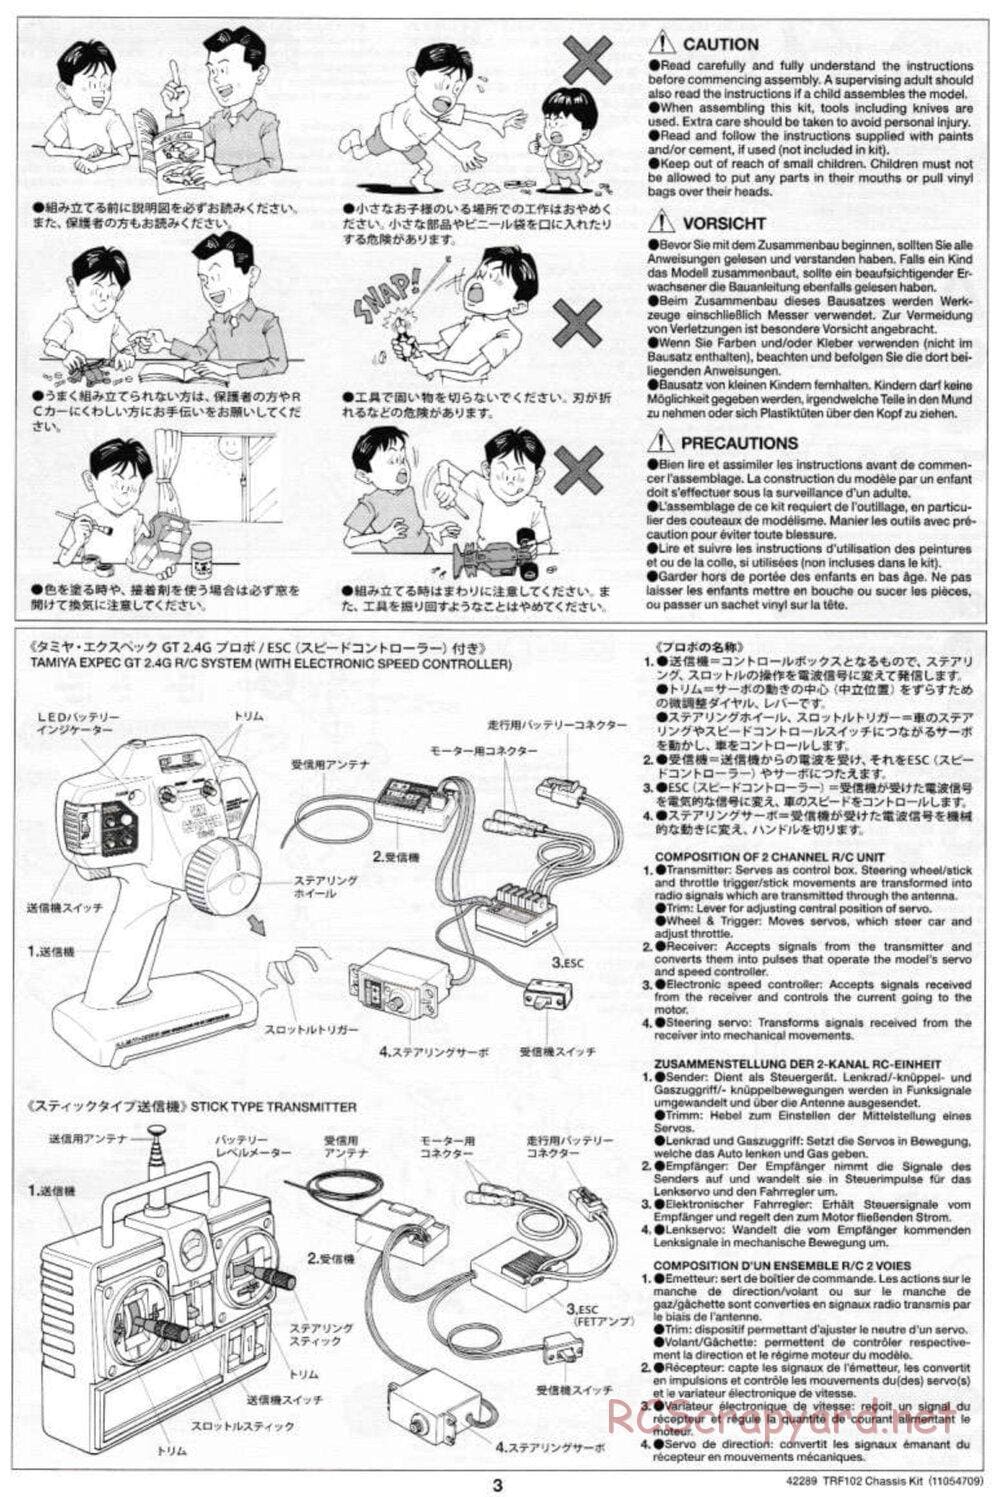 Tamiya - TRF102 Chassis - Manual - Page 3